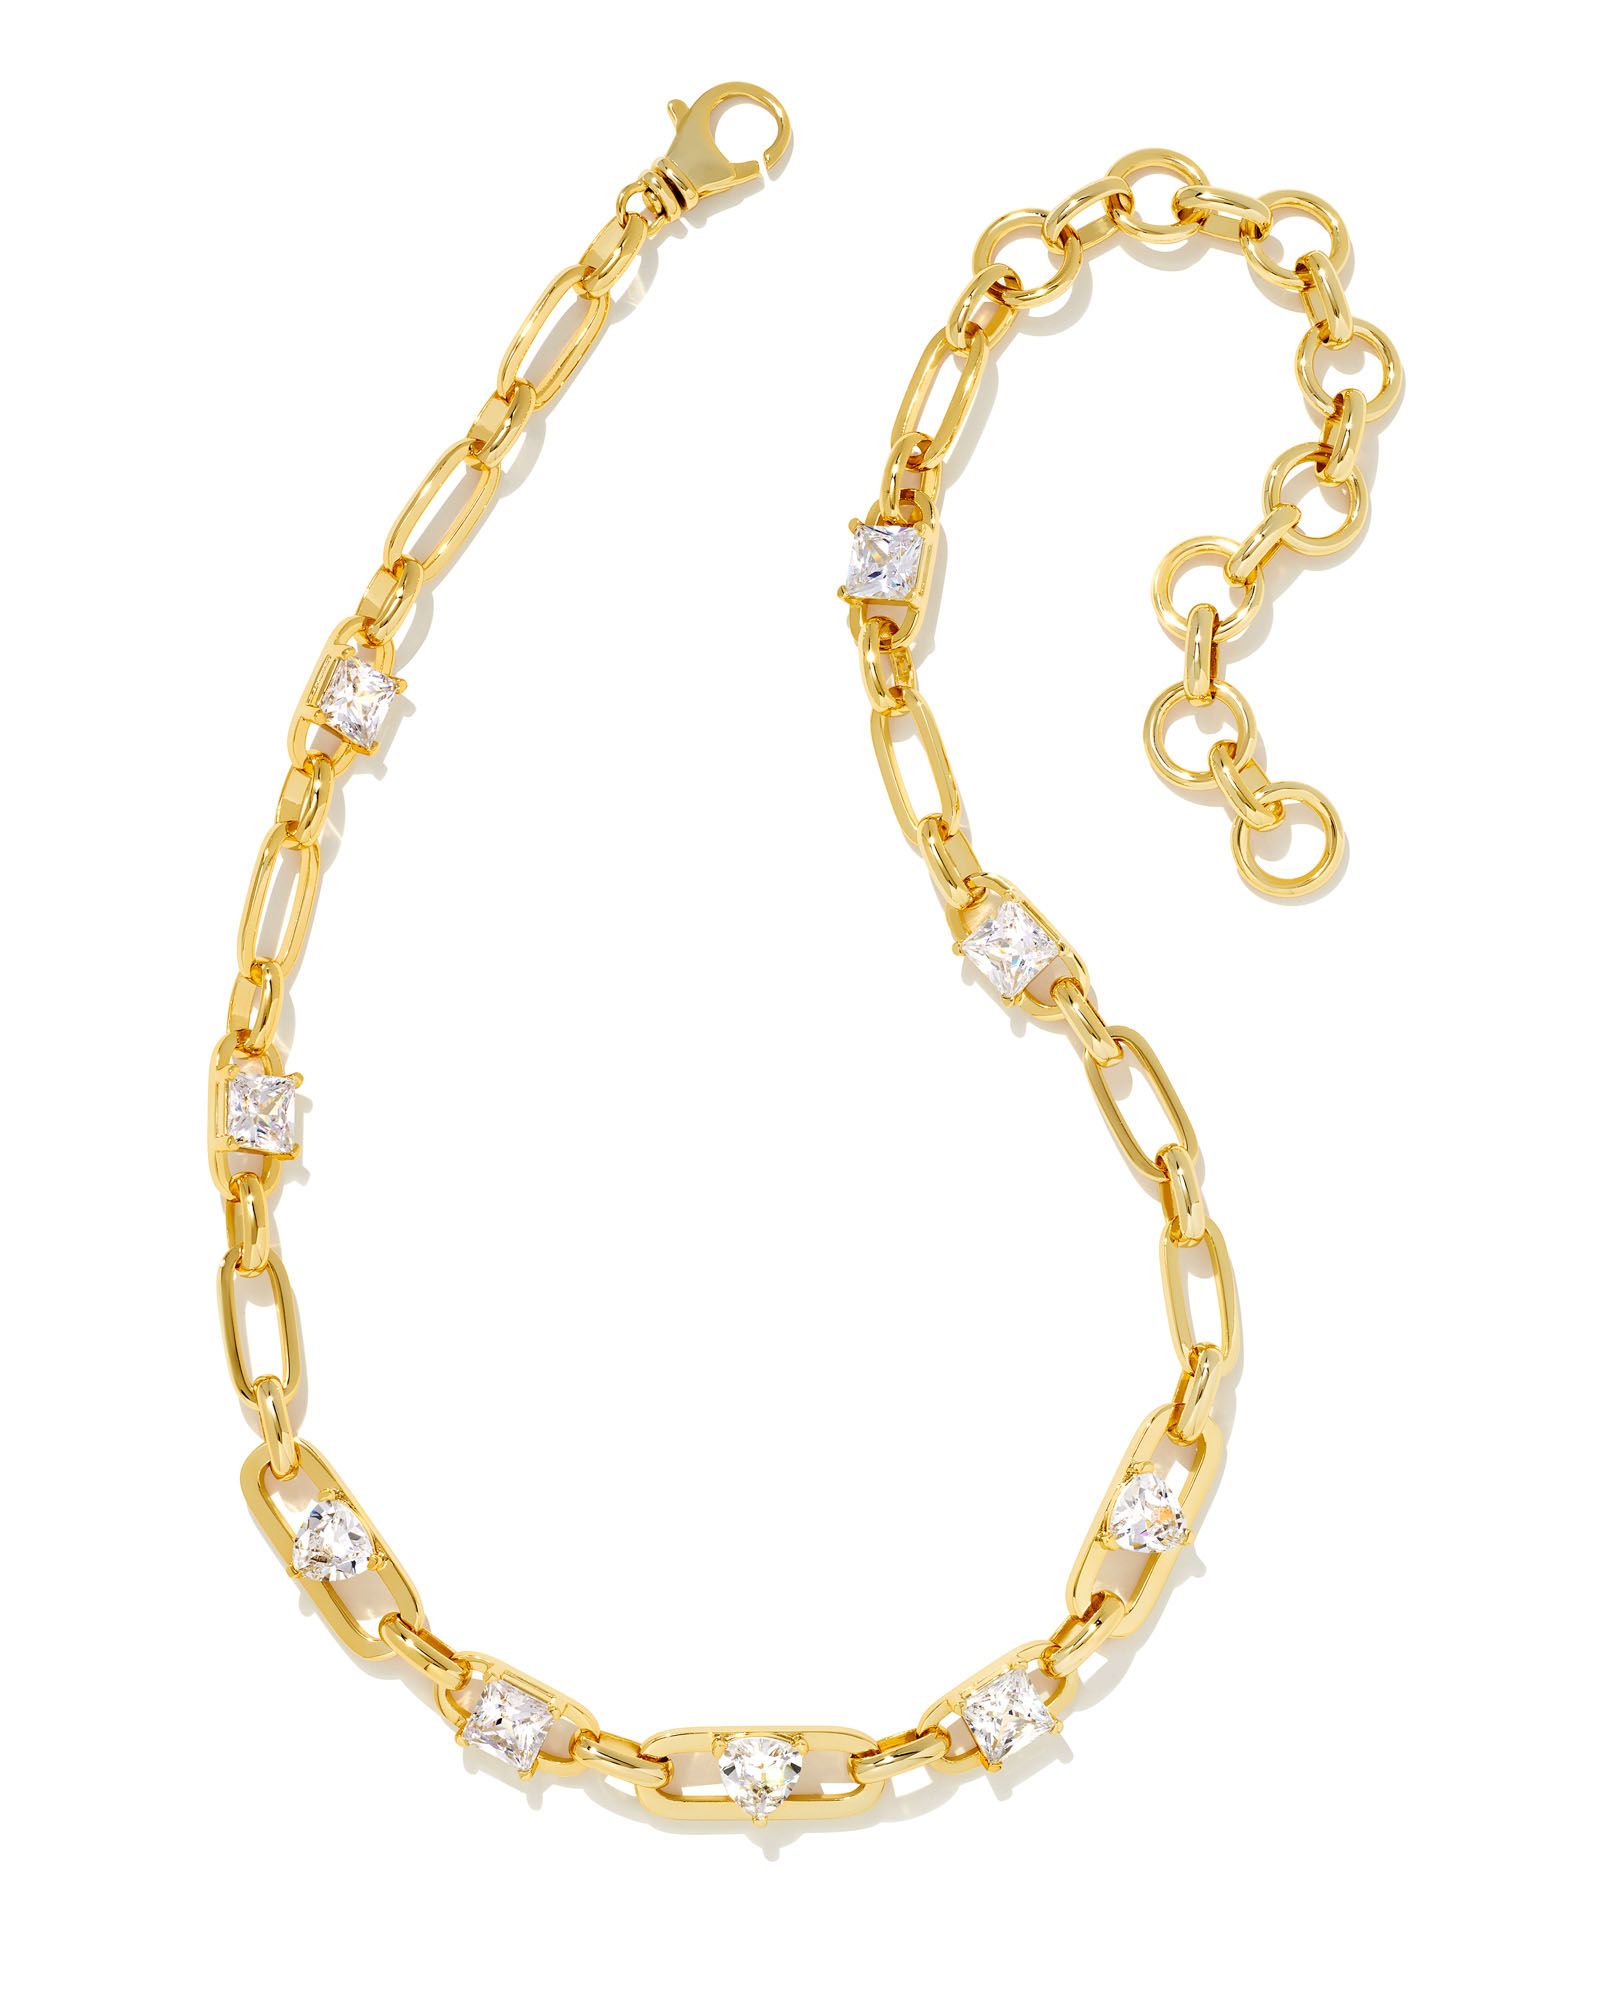 Blair Gold Jewel Chain Necklace in White Crystal | Kendra Scott | Kendra Scott